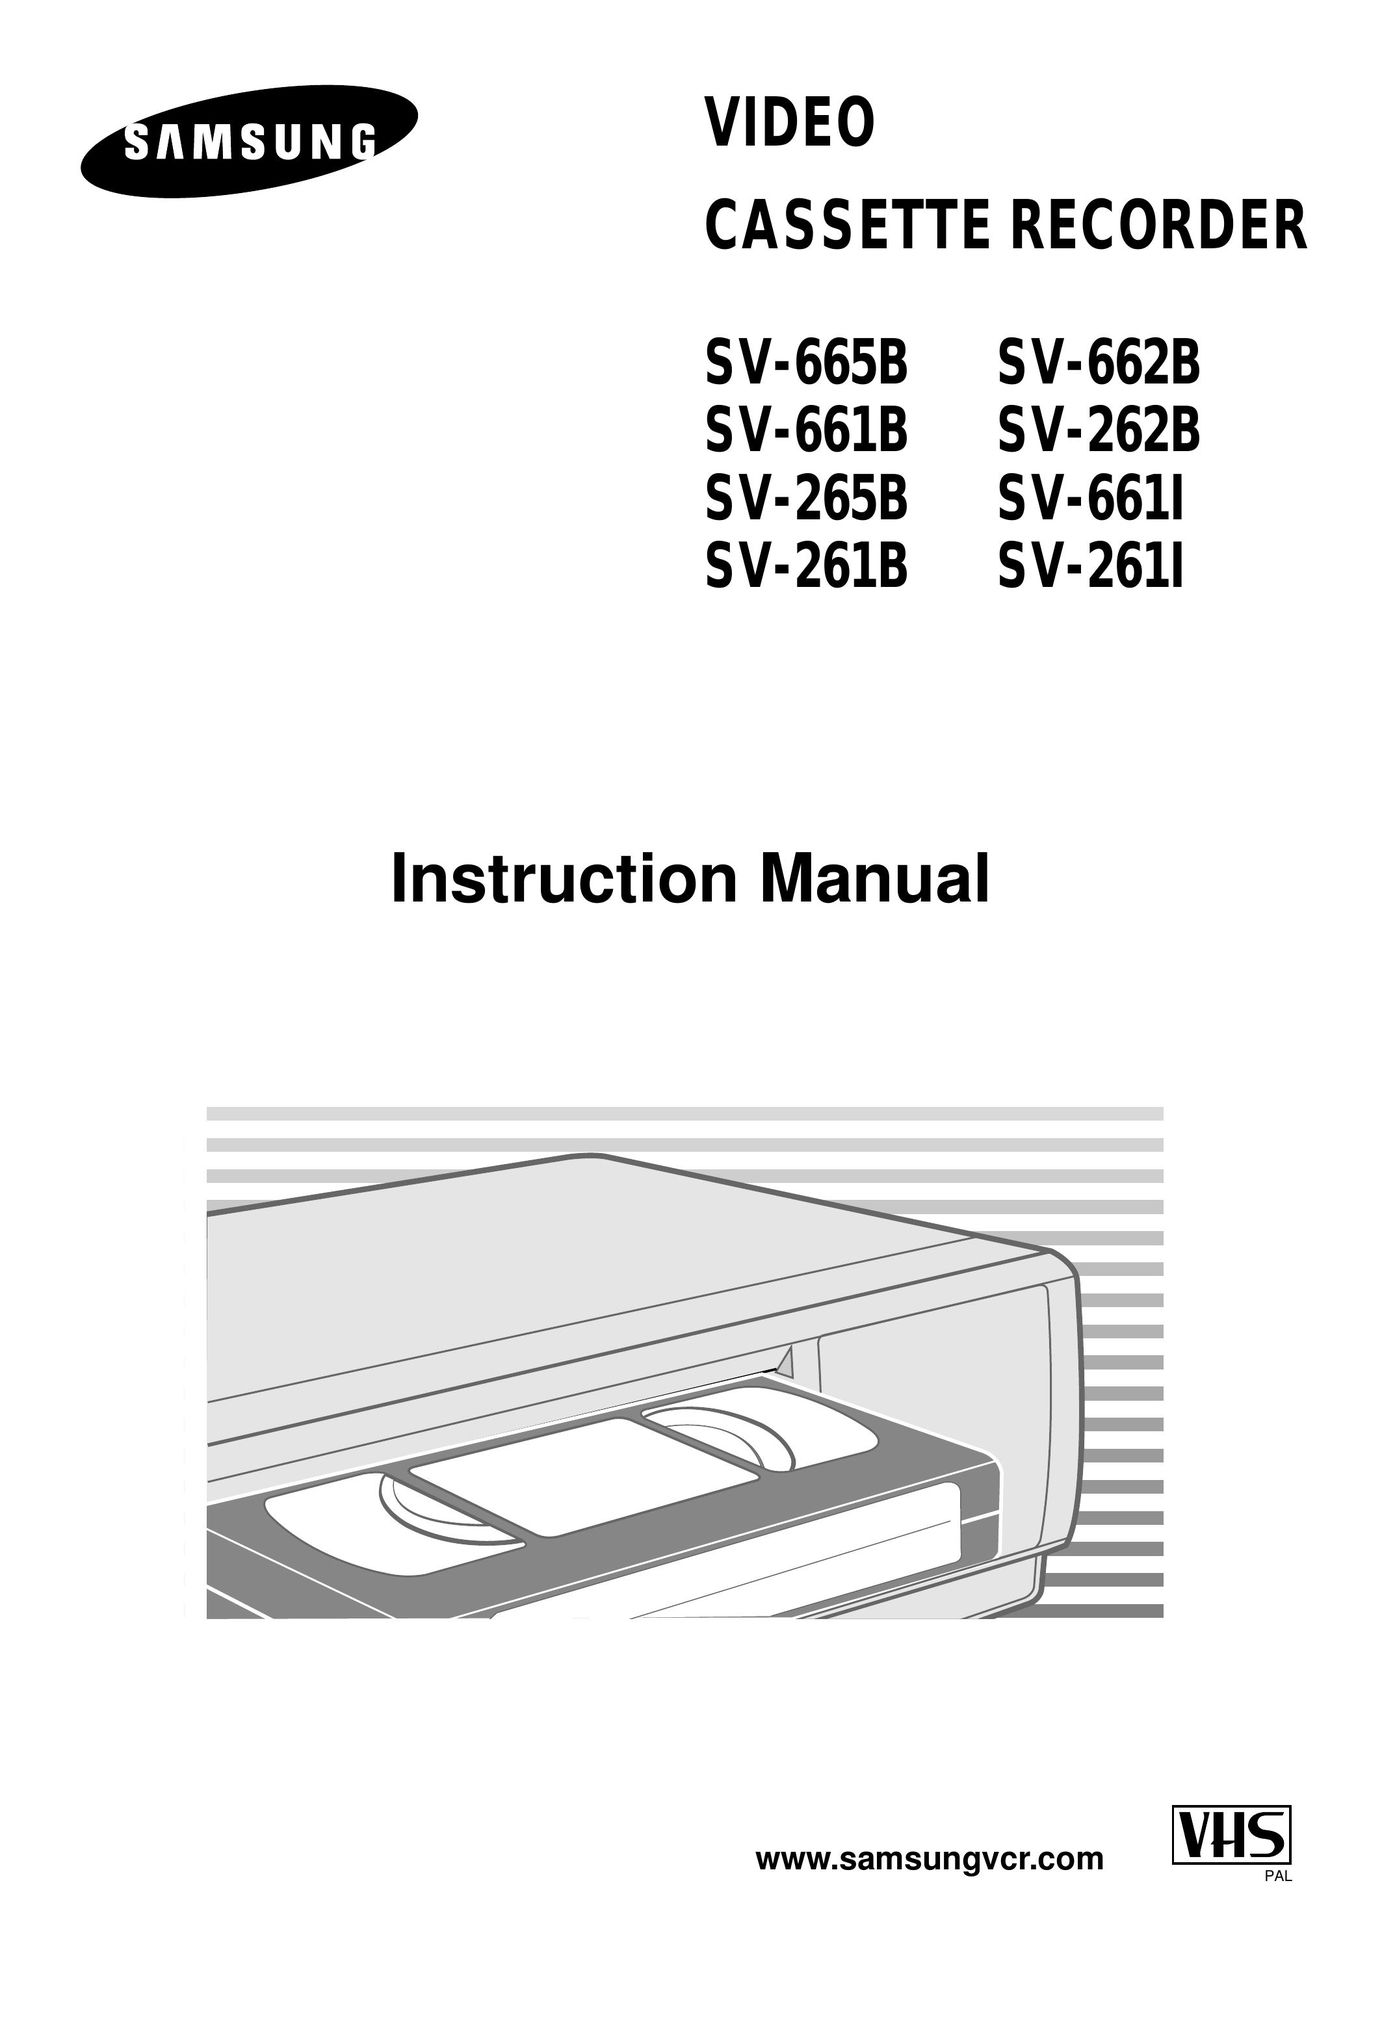 Samsung SV-661I VCR User Manual